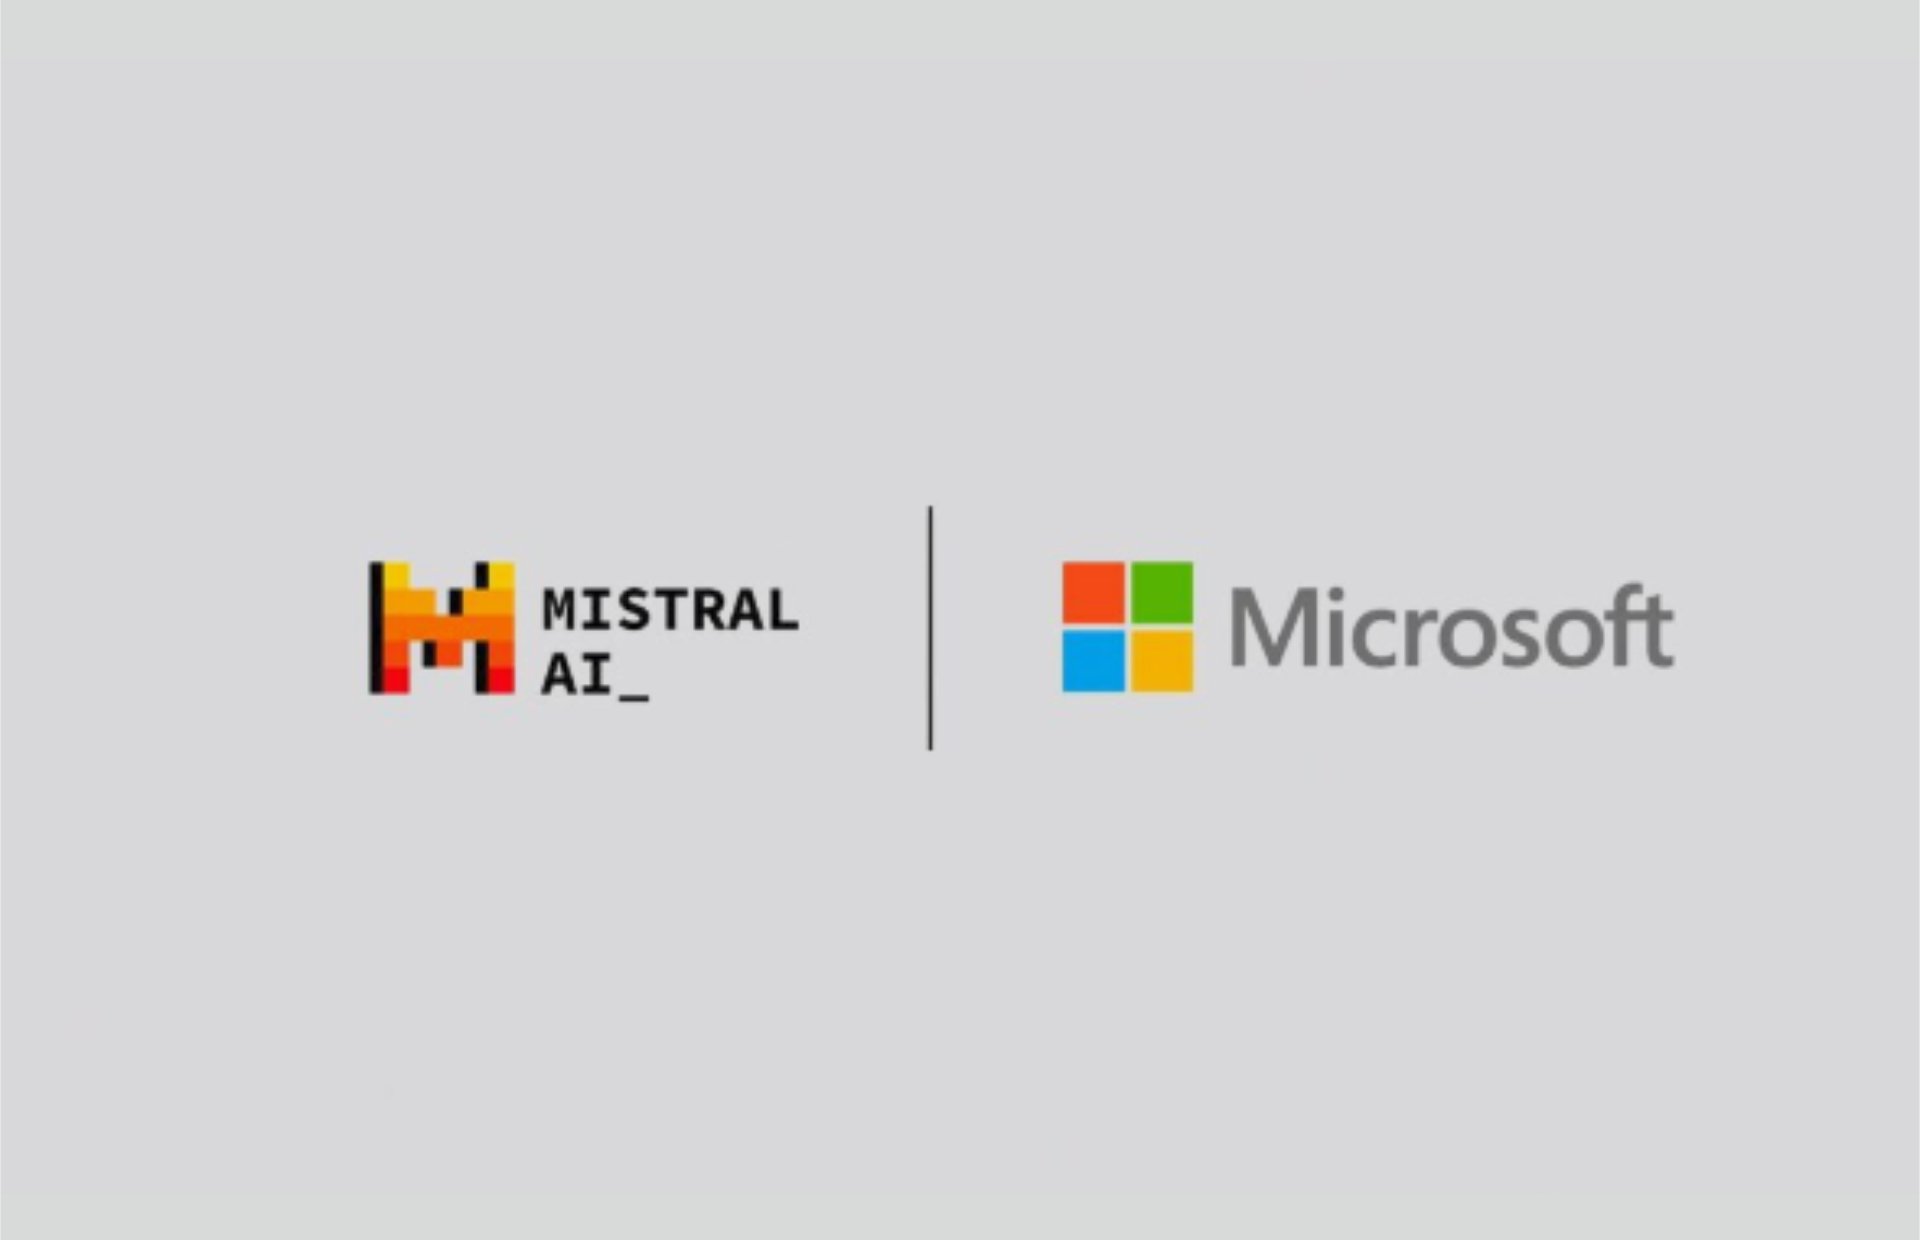 Mistral - Microsoft partnership